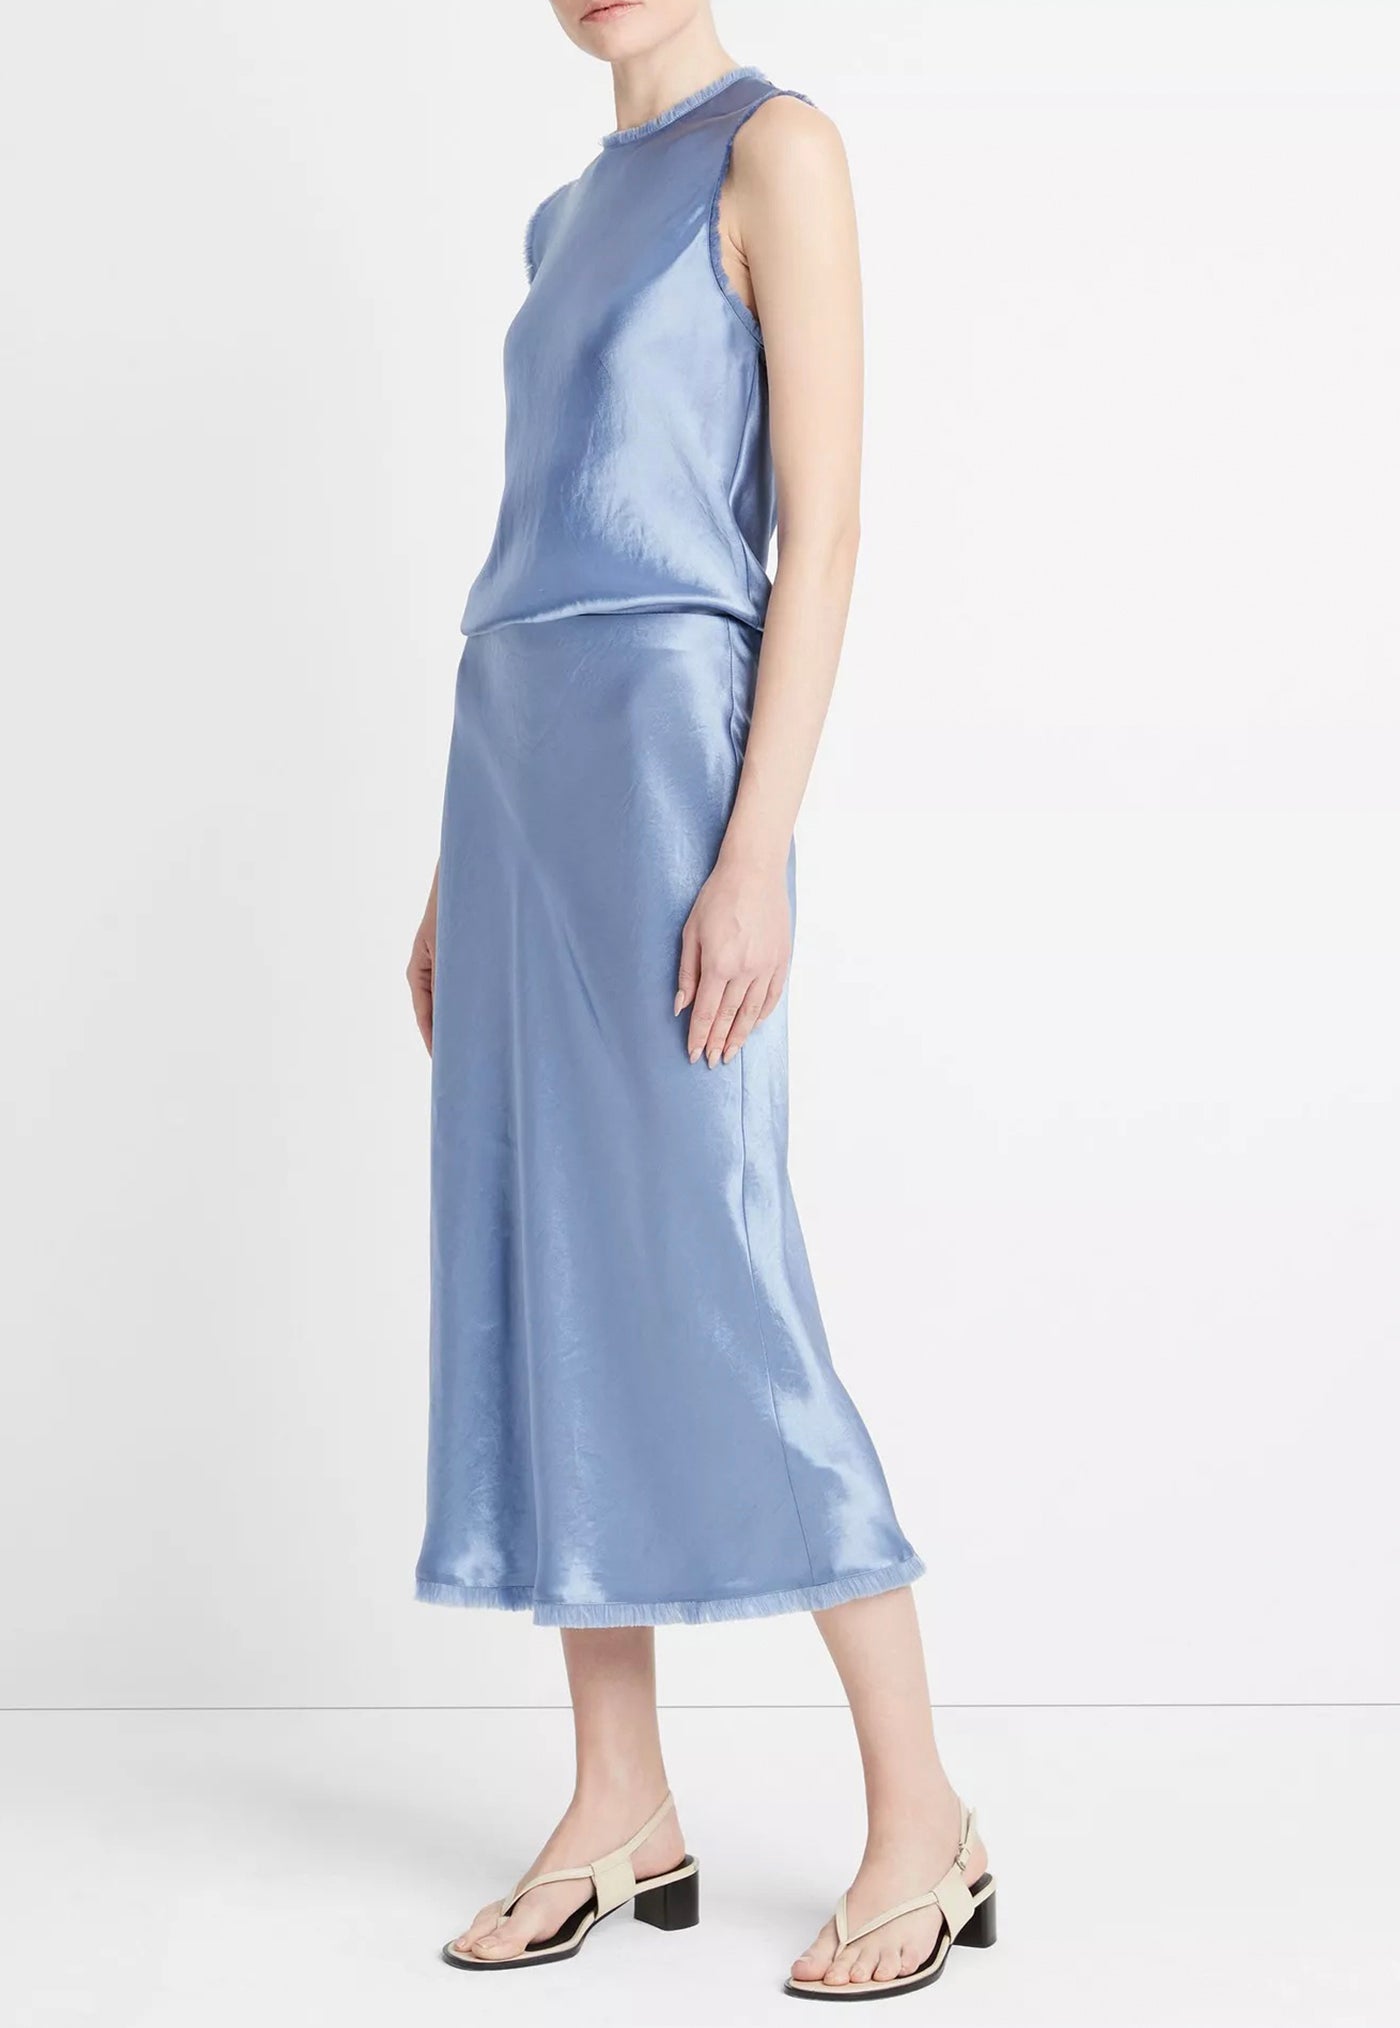 Fray Edge Bias Skirt - Azure Gem sold by Angel Divine